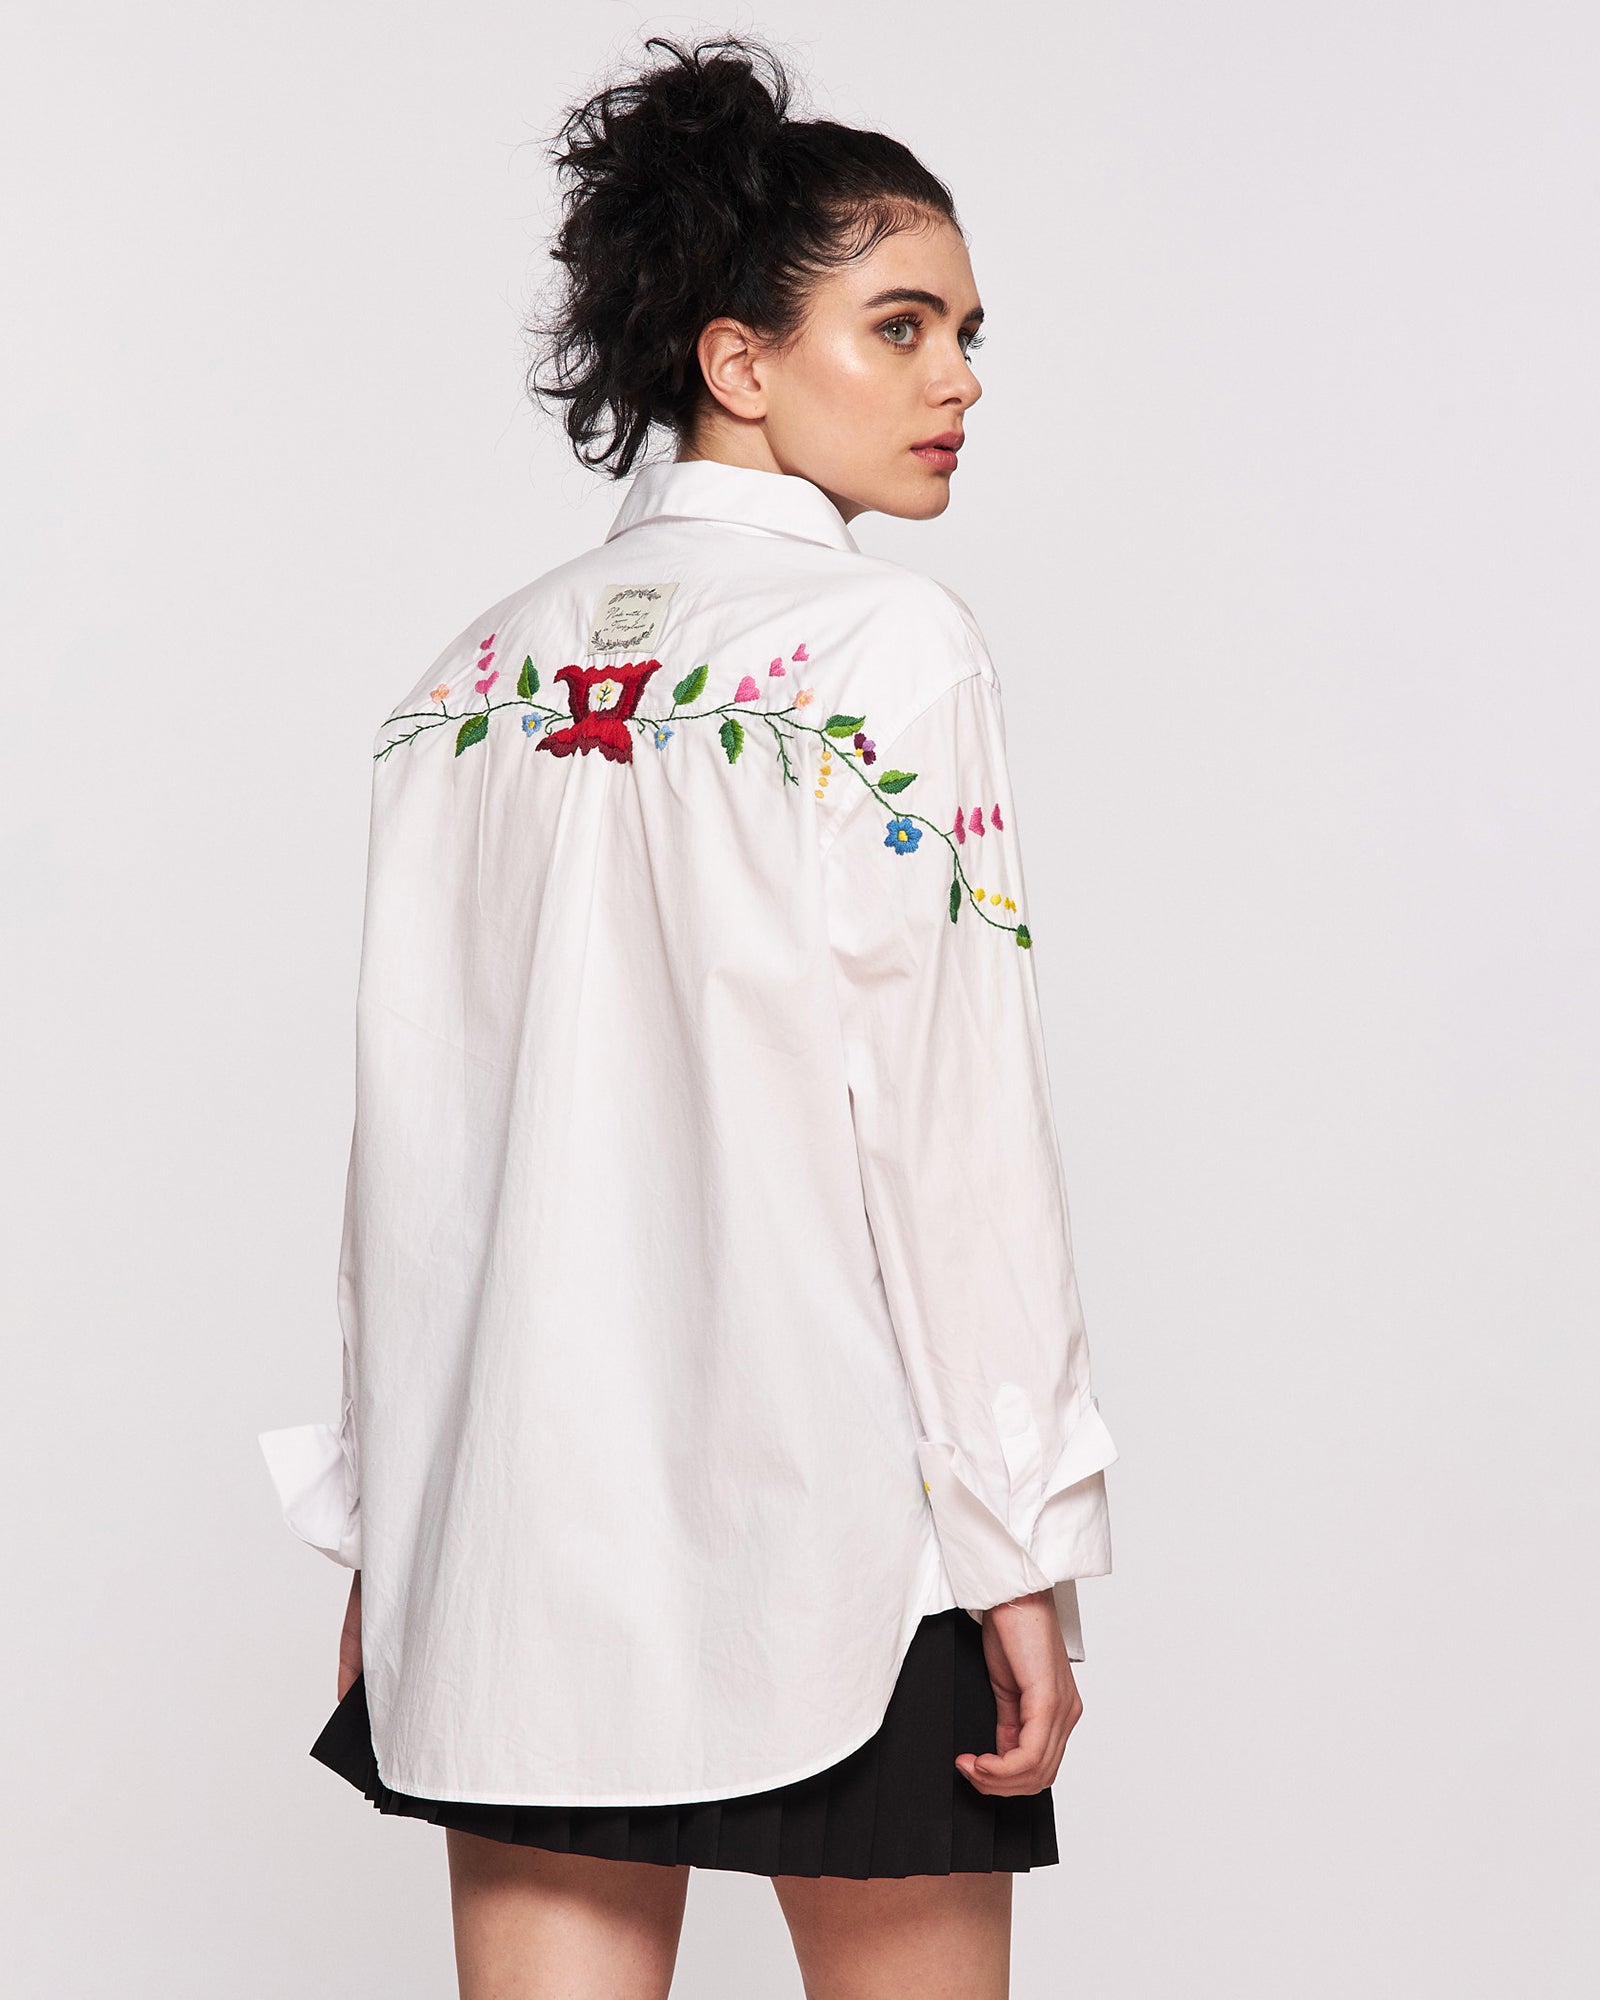 Hand-embroidered women's shirt "Wild flowers"